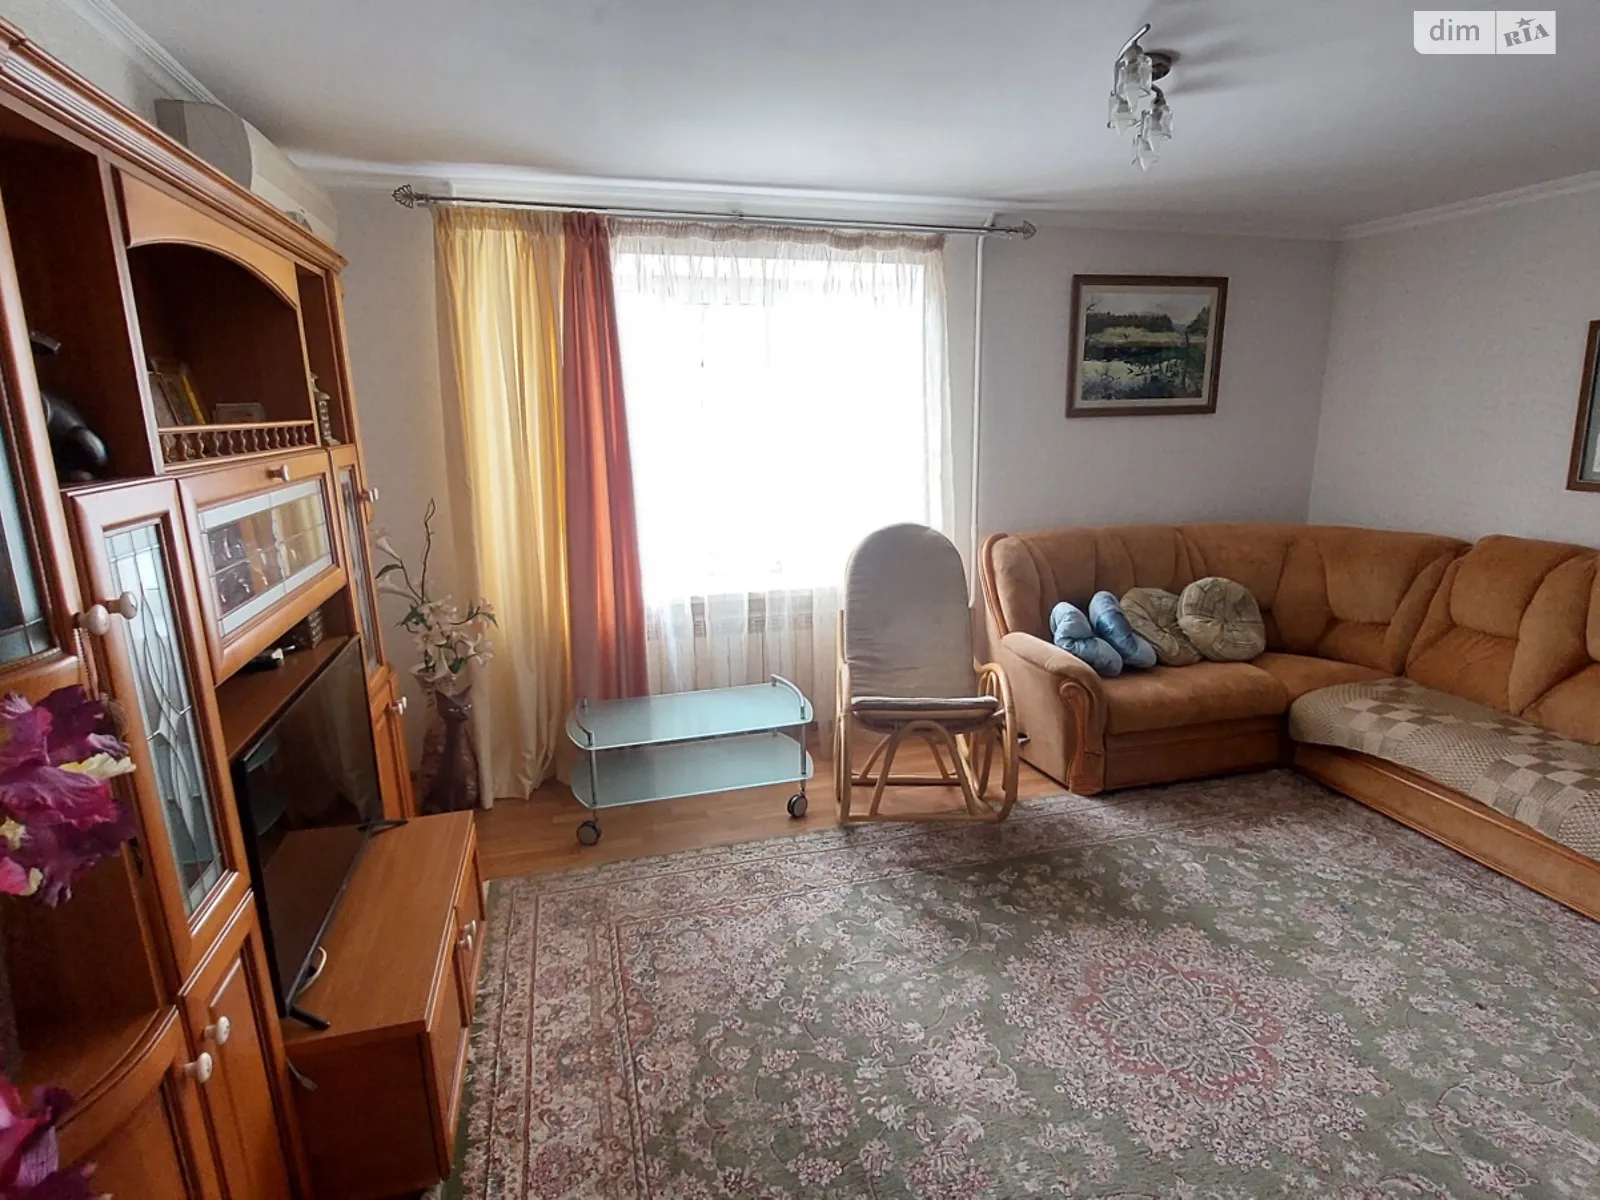 Сдается в аренду 3-комнатная квартира 79 кв. м в Николаеве - фото 3